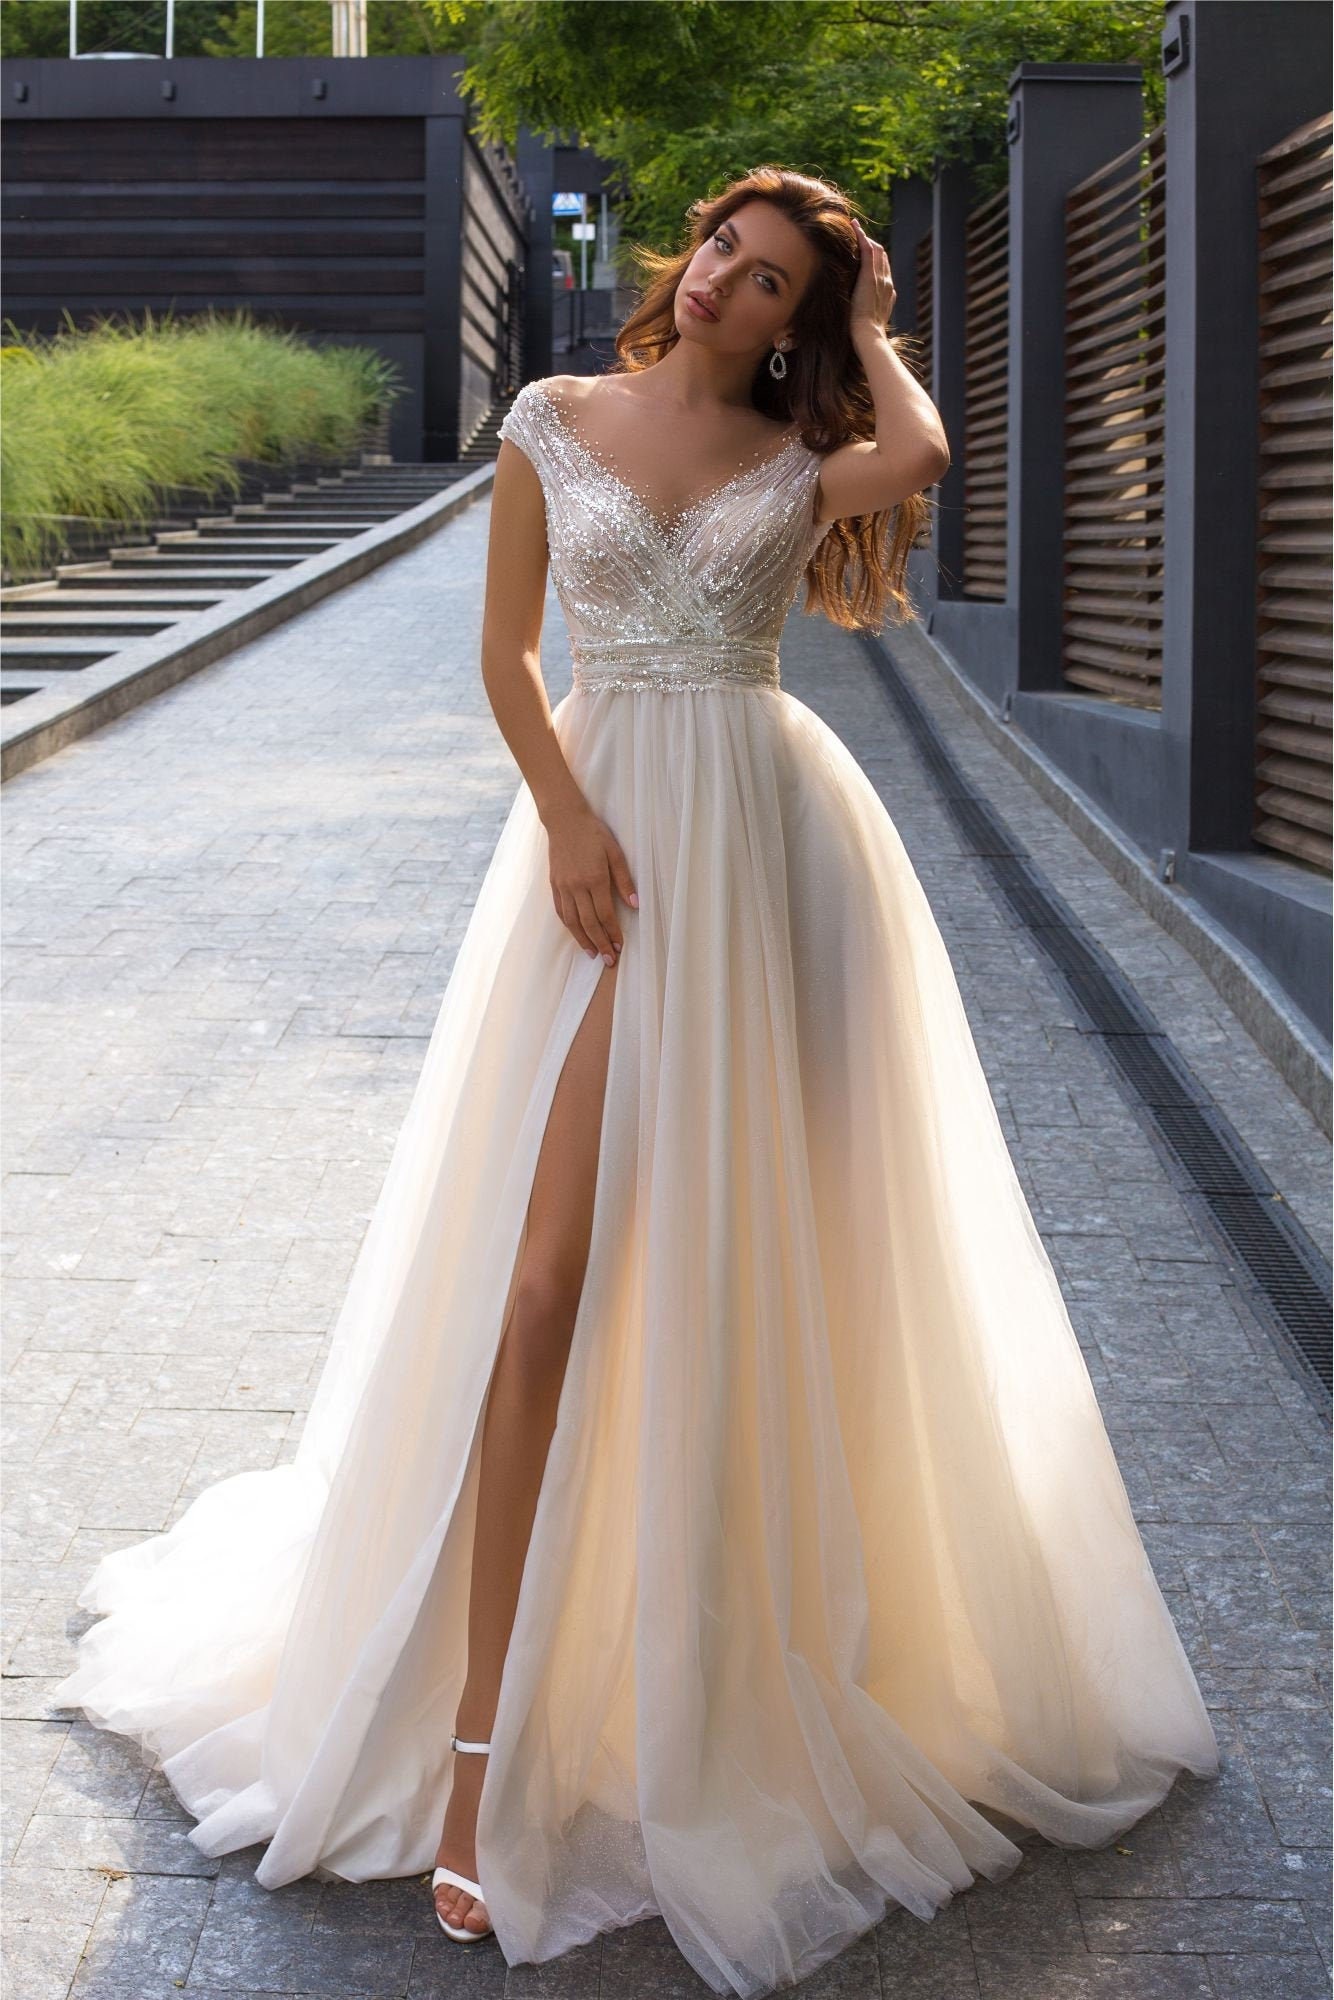 Vestido de novia de tul blanco / vestido de novia bordado a mano